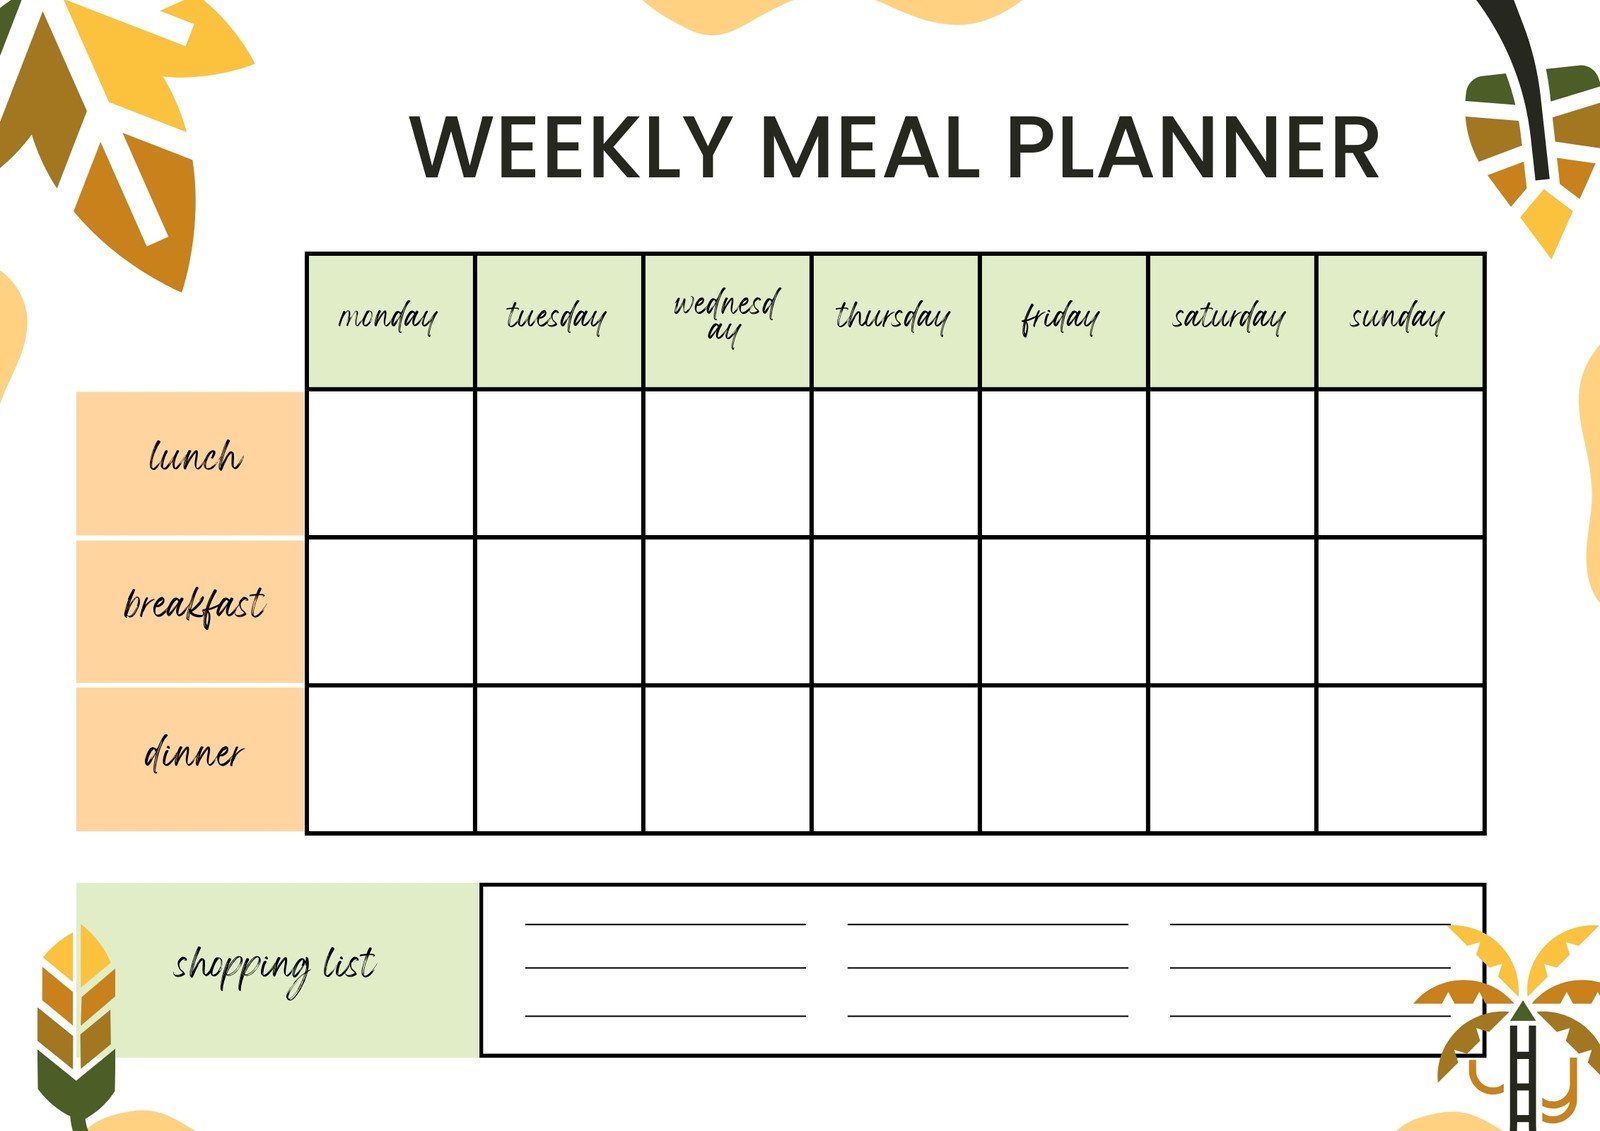 https://marketplace.canva.com/EAFKZwqKaAs/1/0/1600w/canva-green-and-orange-minimalist-meal-planner-Fpa-8YzhVio.jpg